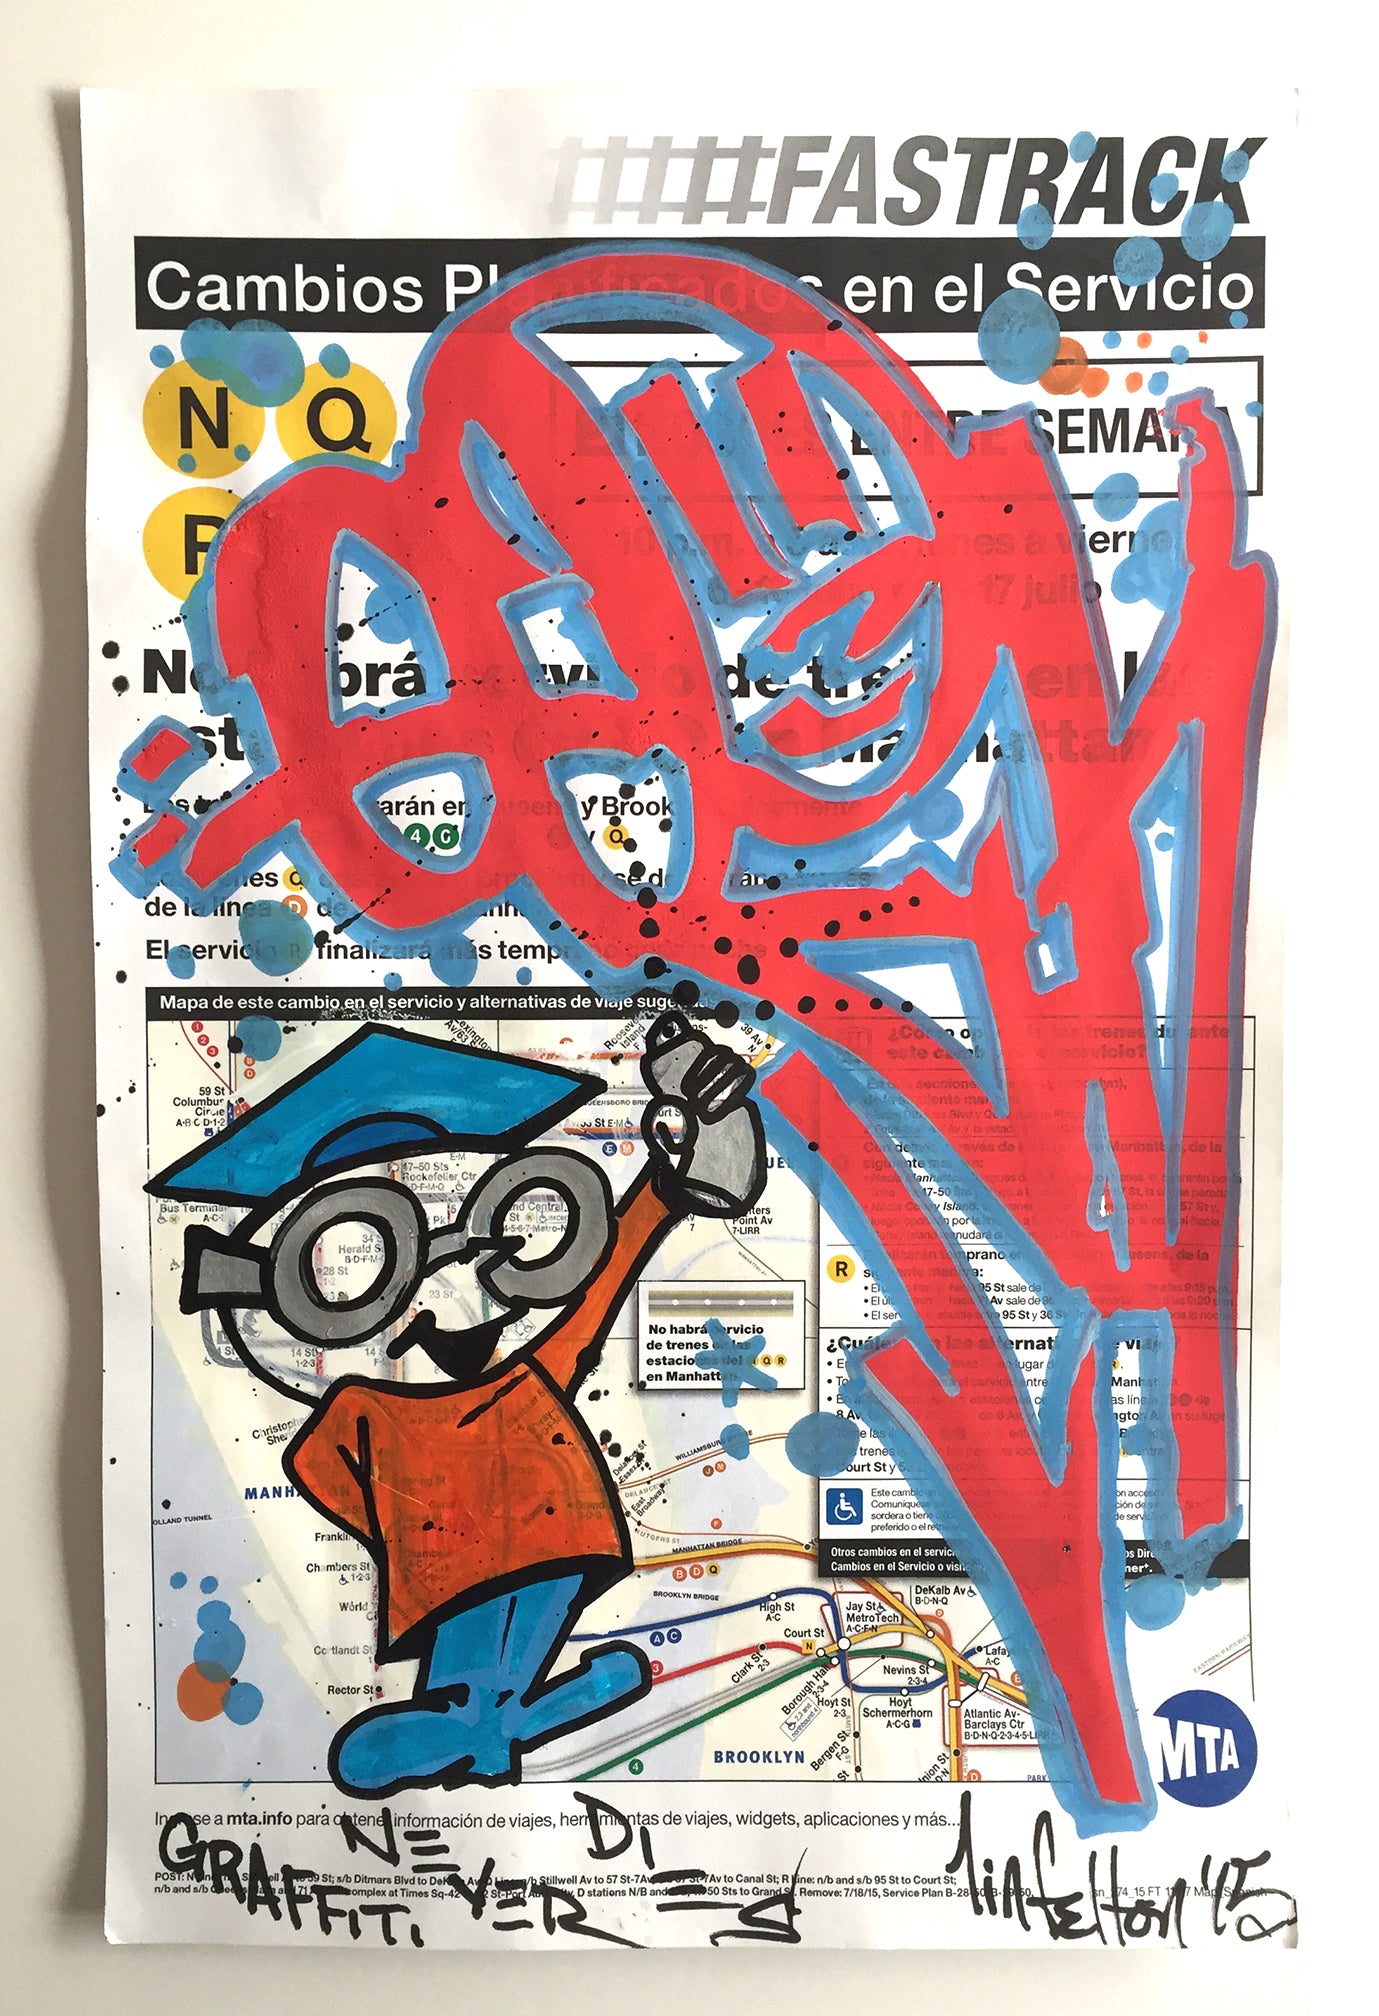 QUIK - "Graffiti Never Dies"  Alert on paper